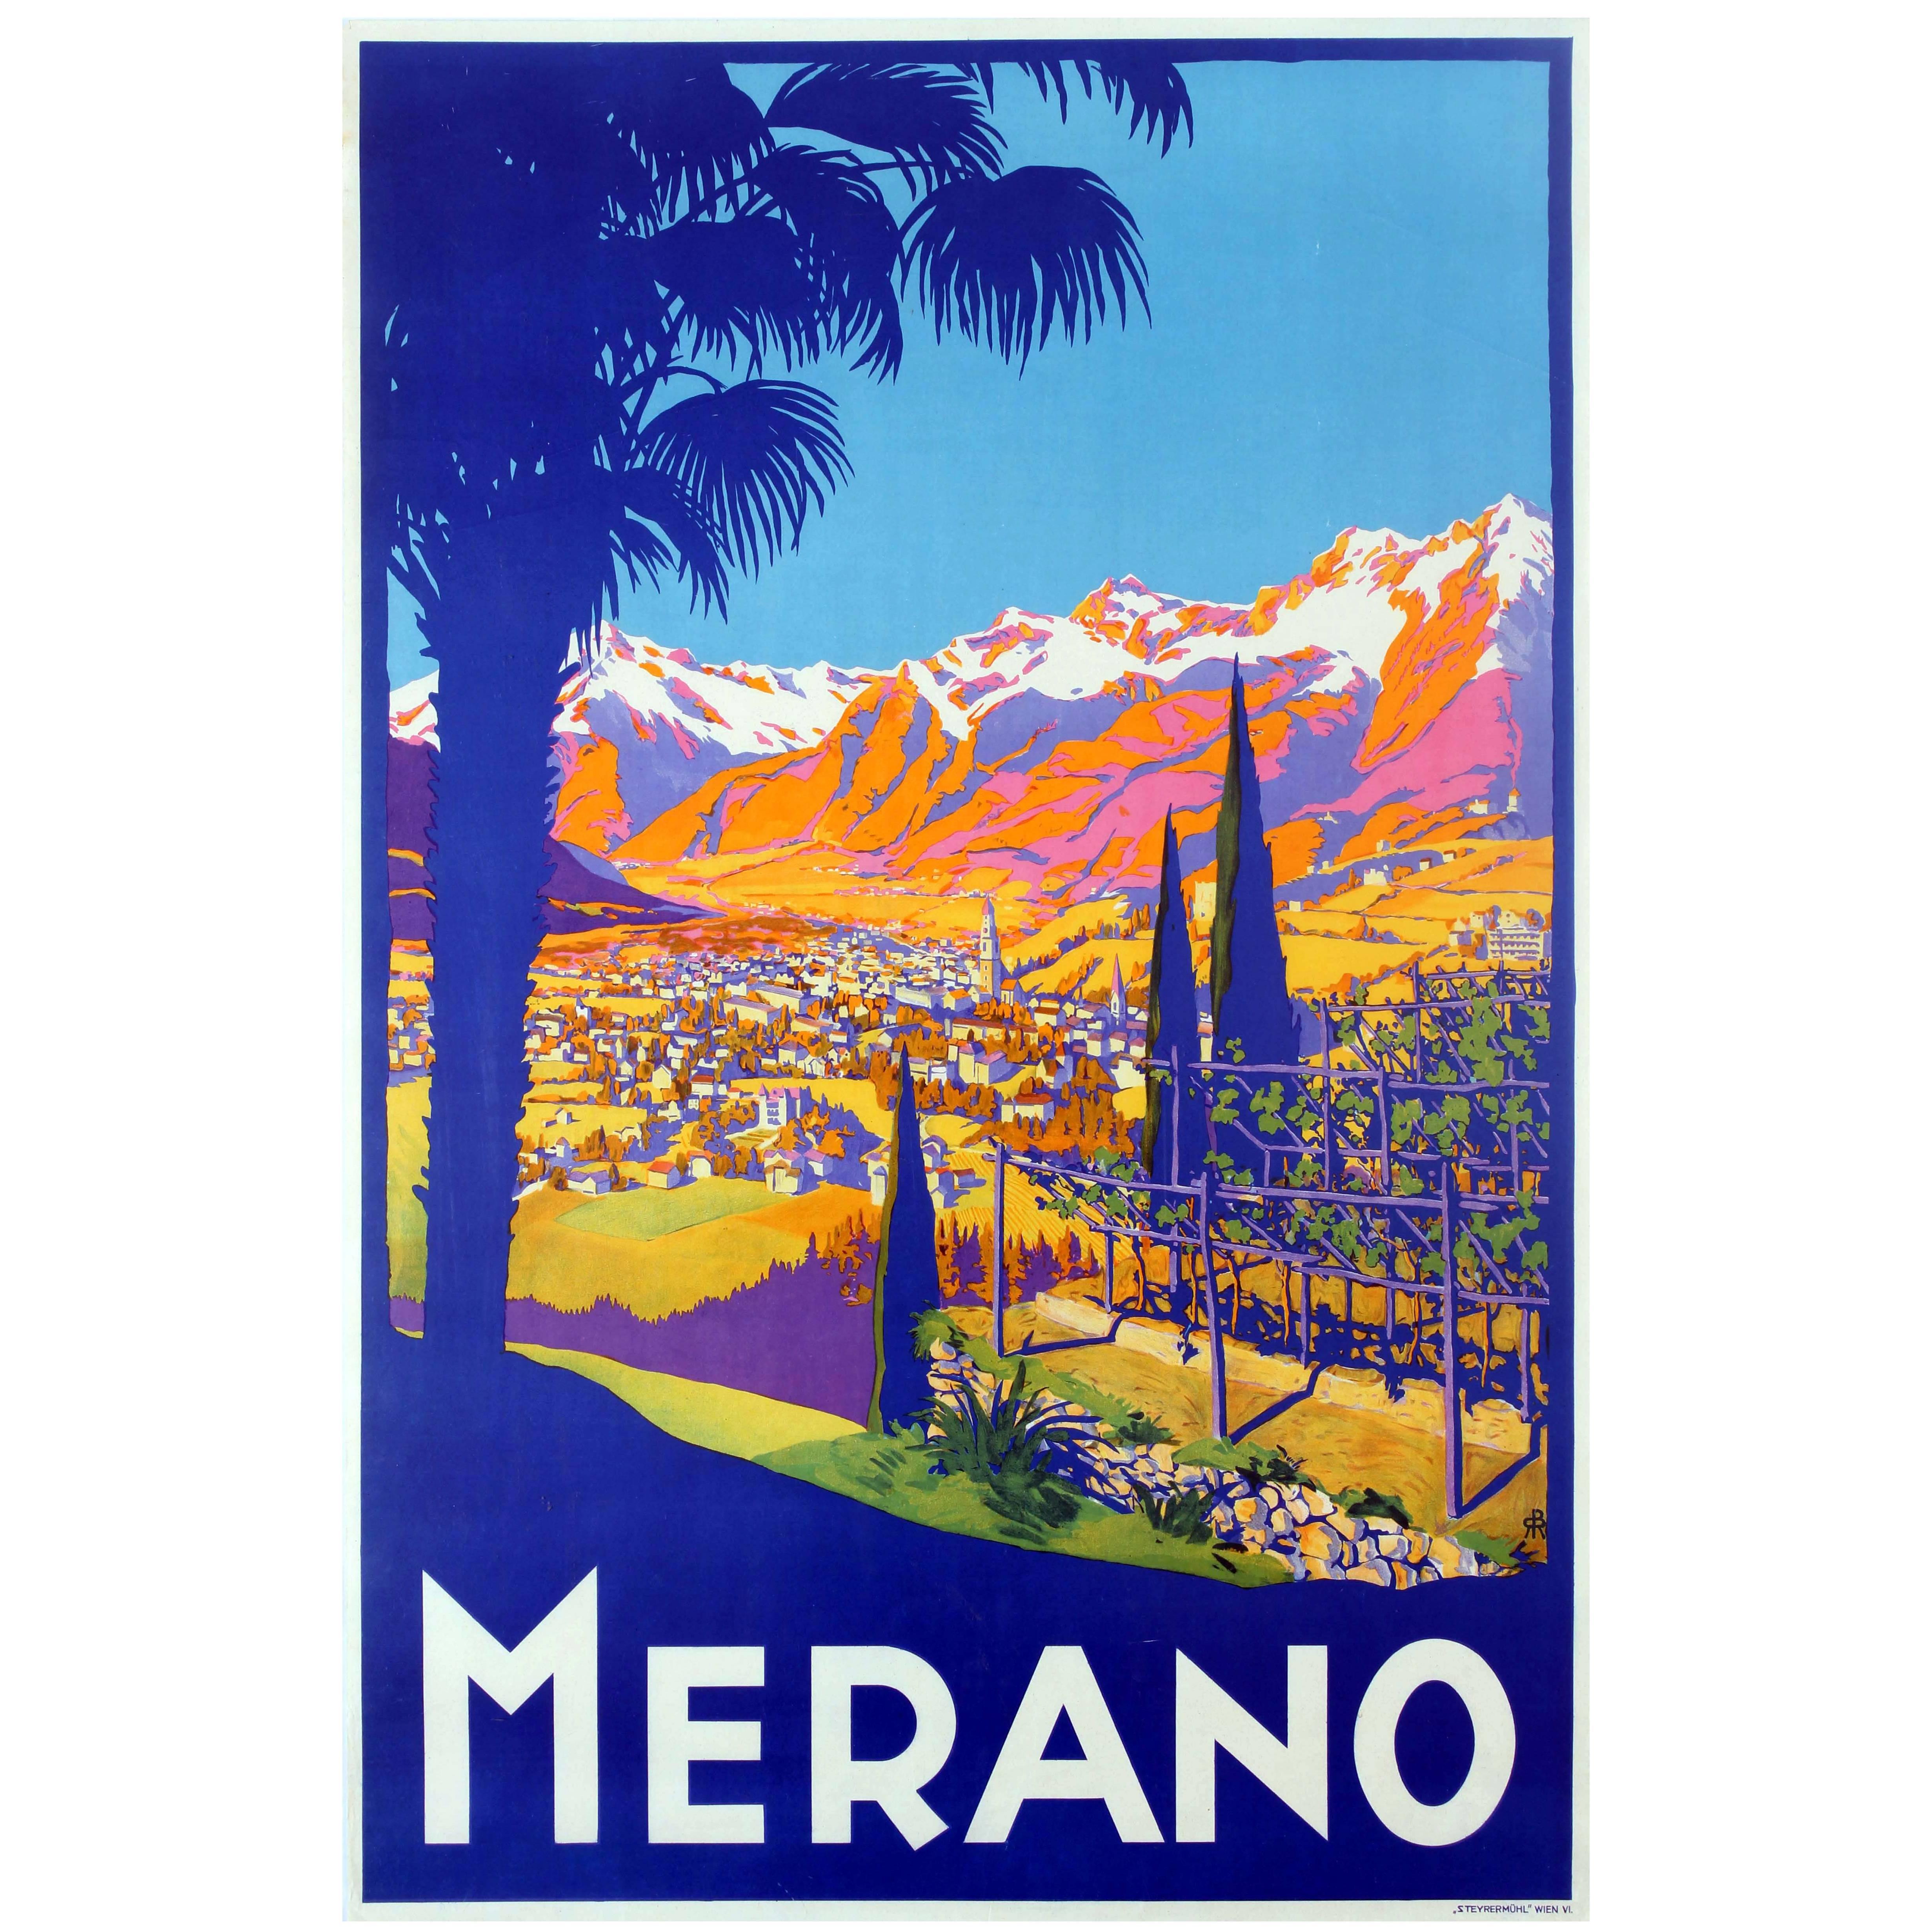 Original Vintage Travel Poster Advertising Merano in the Tyrol Region Italy